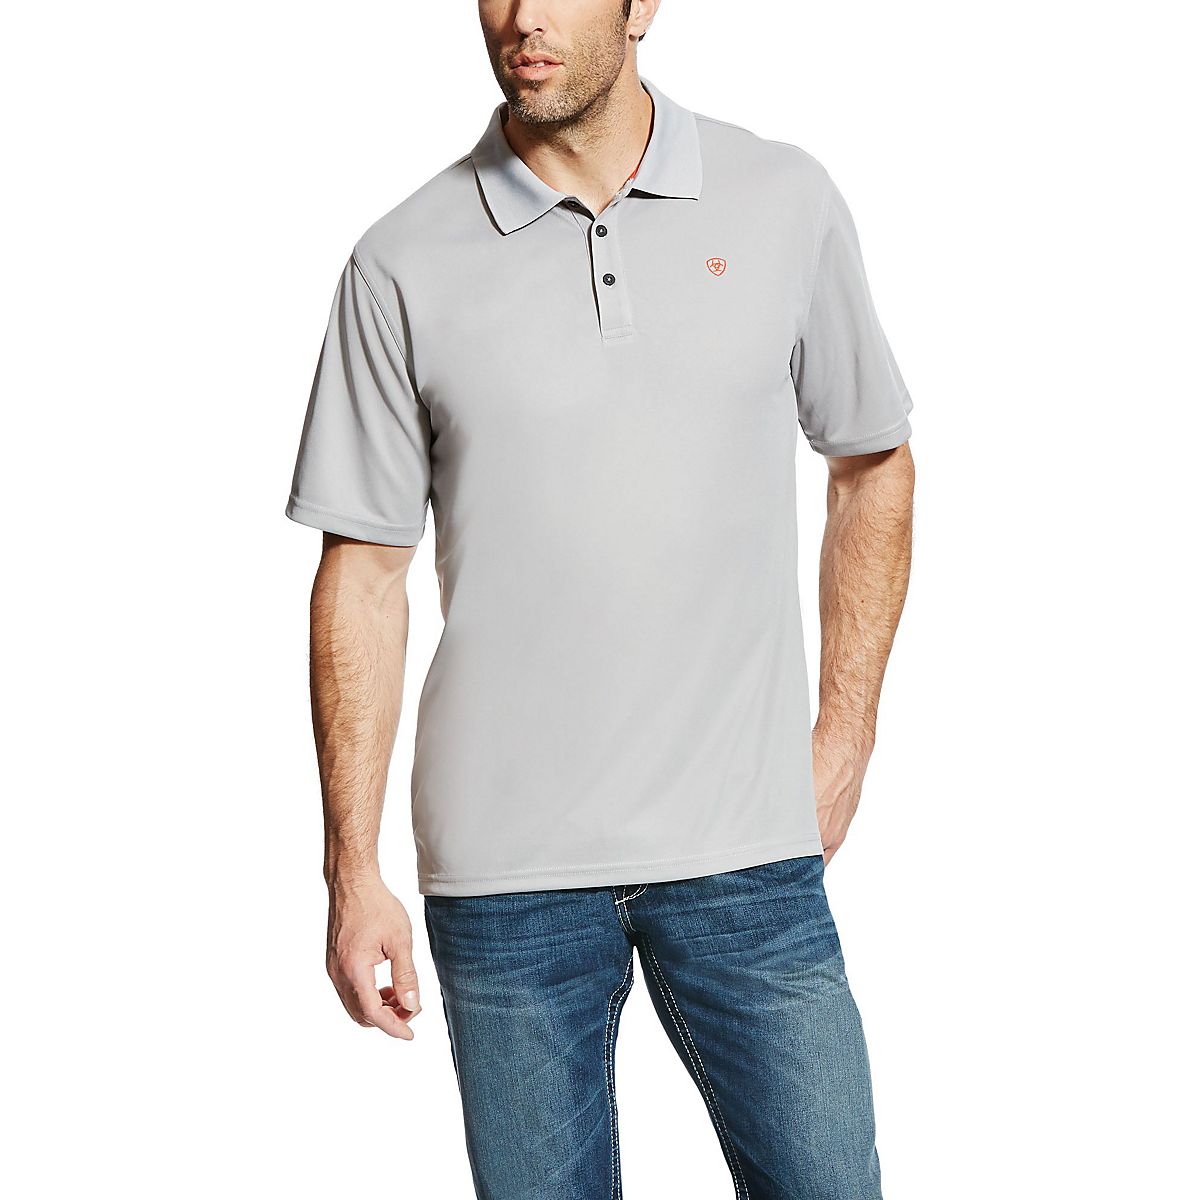 Ariat Men's TEK Polo Shirt | Free Shipping at Academy